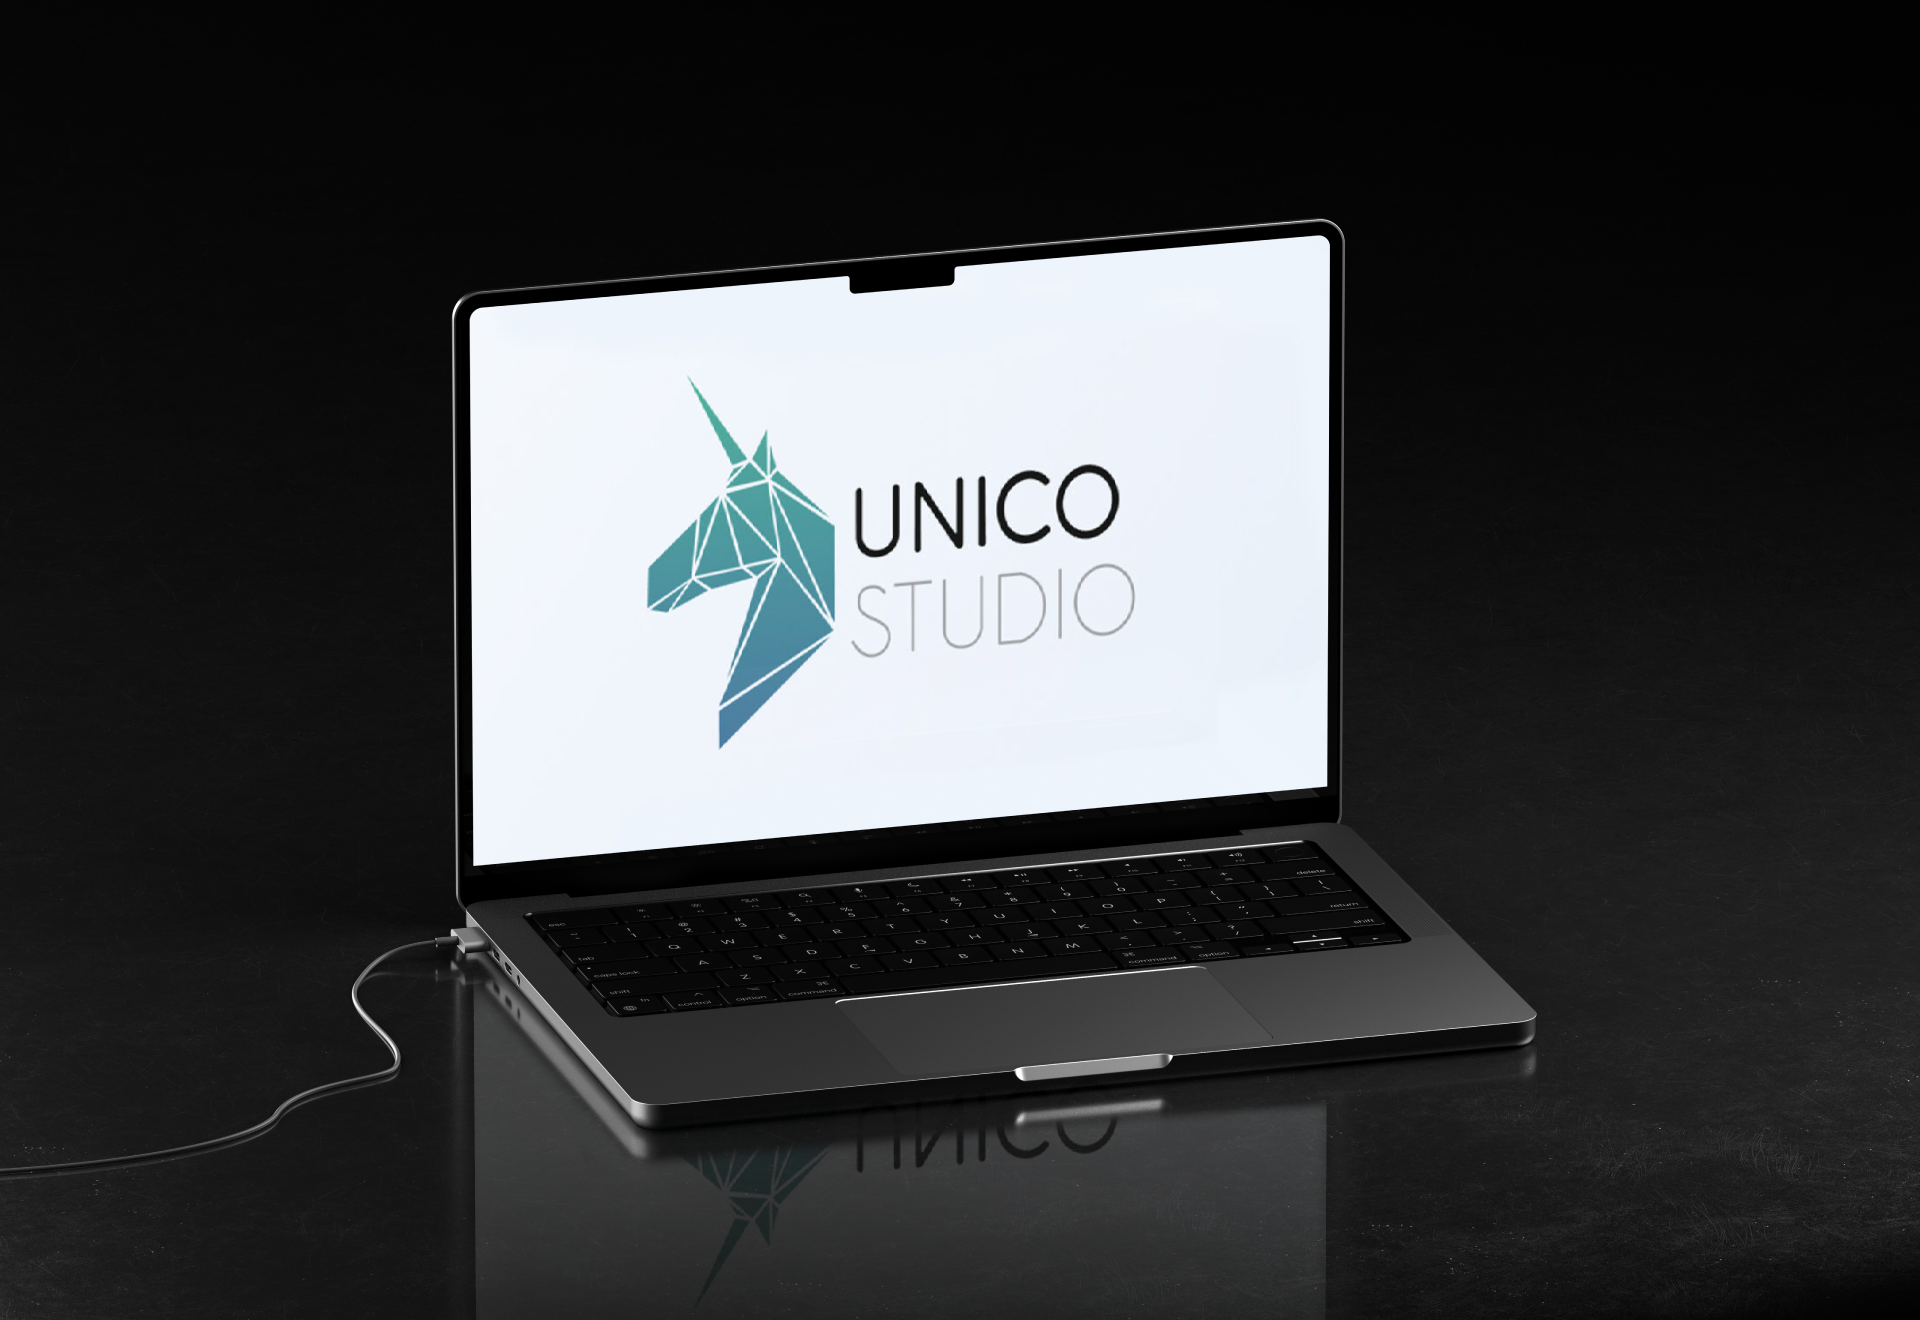 Unico Studio reaches 750 million downloads